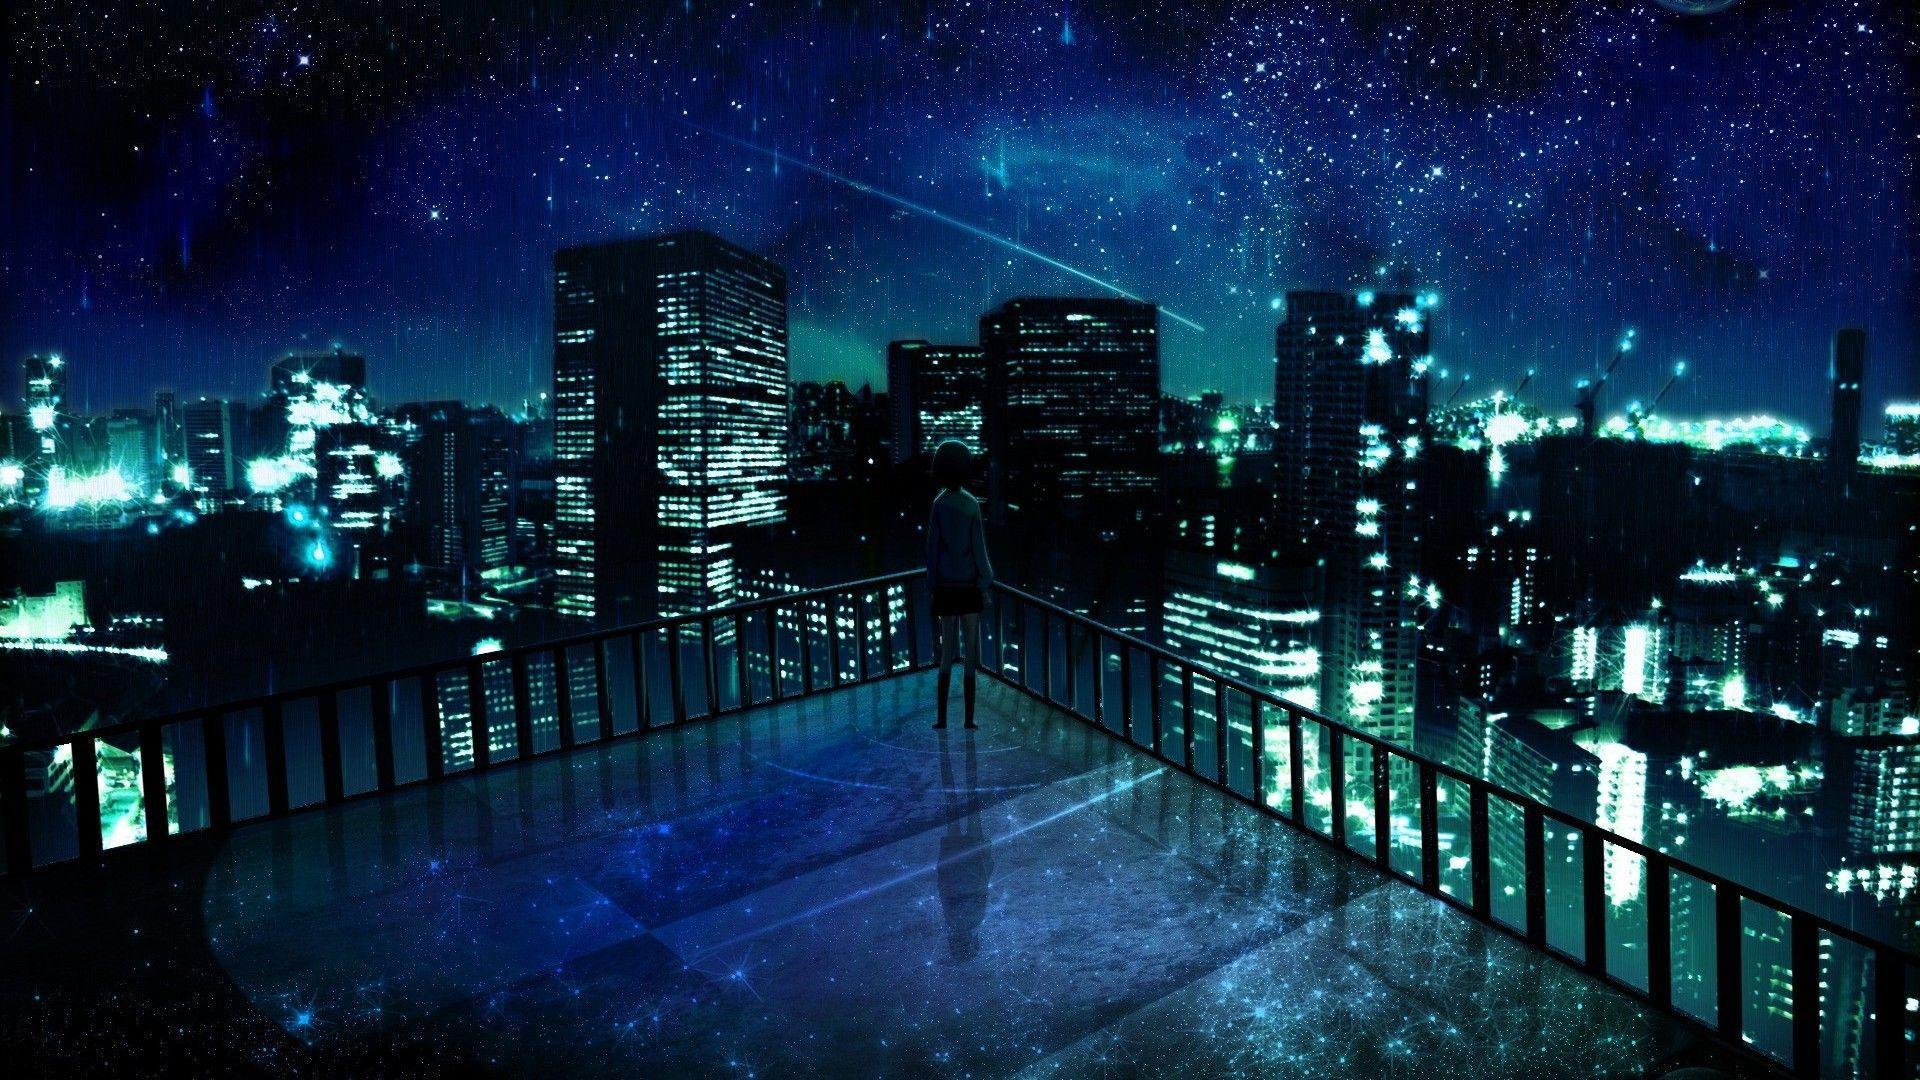 Anime Night Background Images - Free Download on Freepik